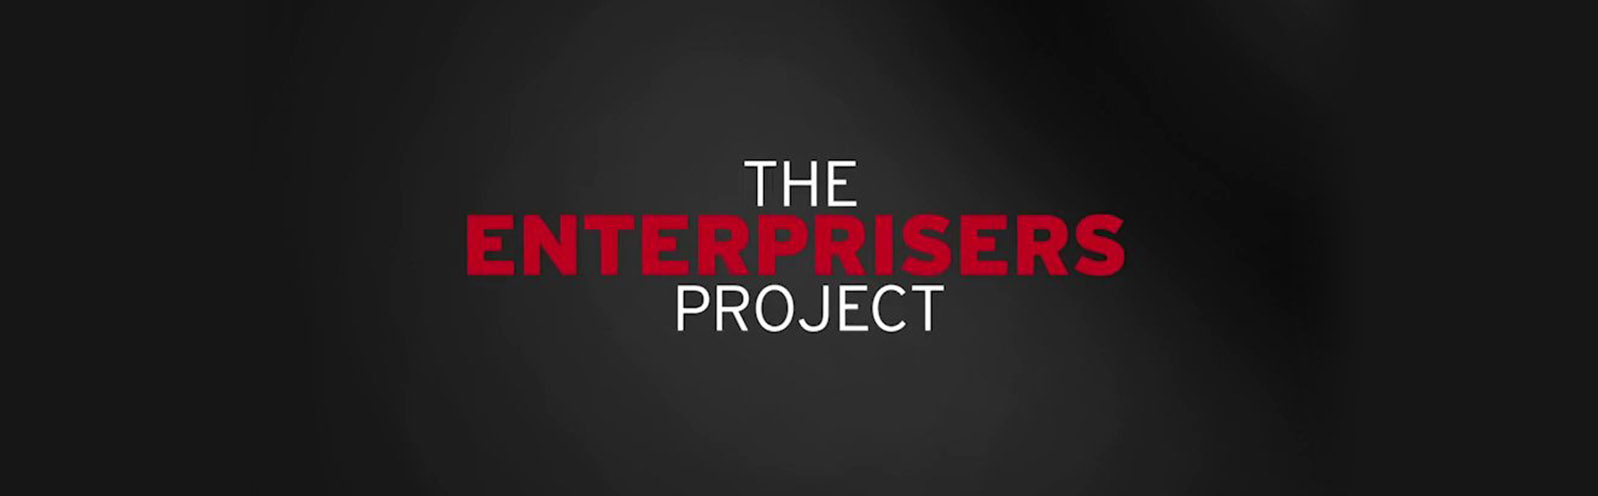  The Enterprisers Project logo